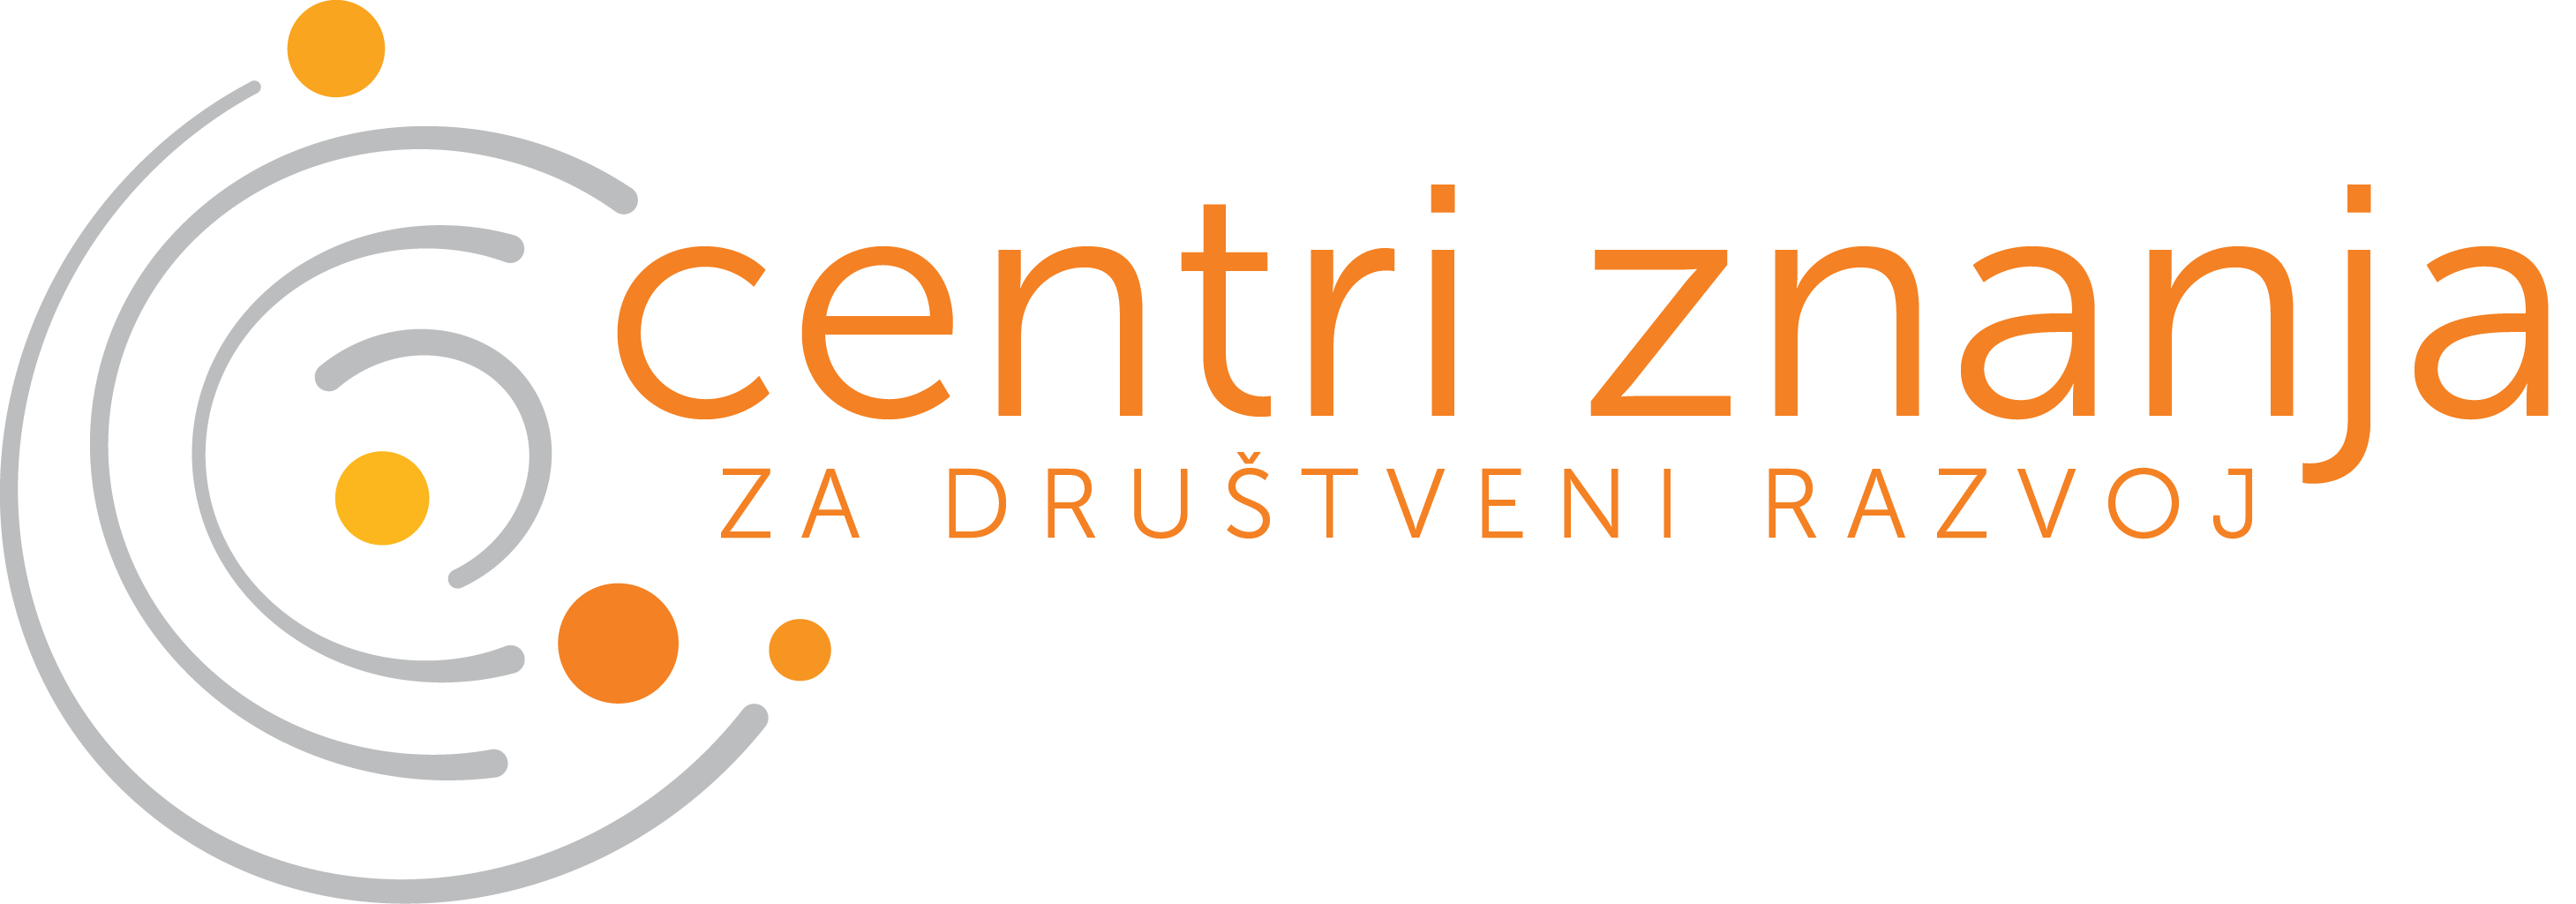 Centri znanja za drustveni razvoj   logo   final